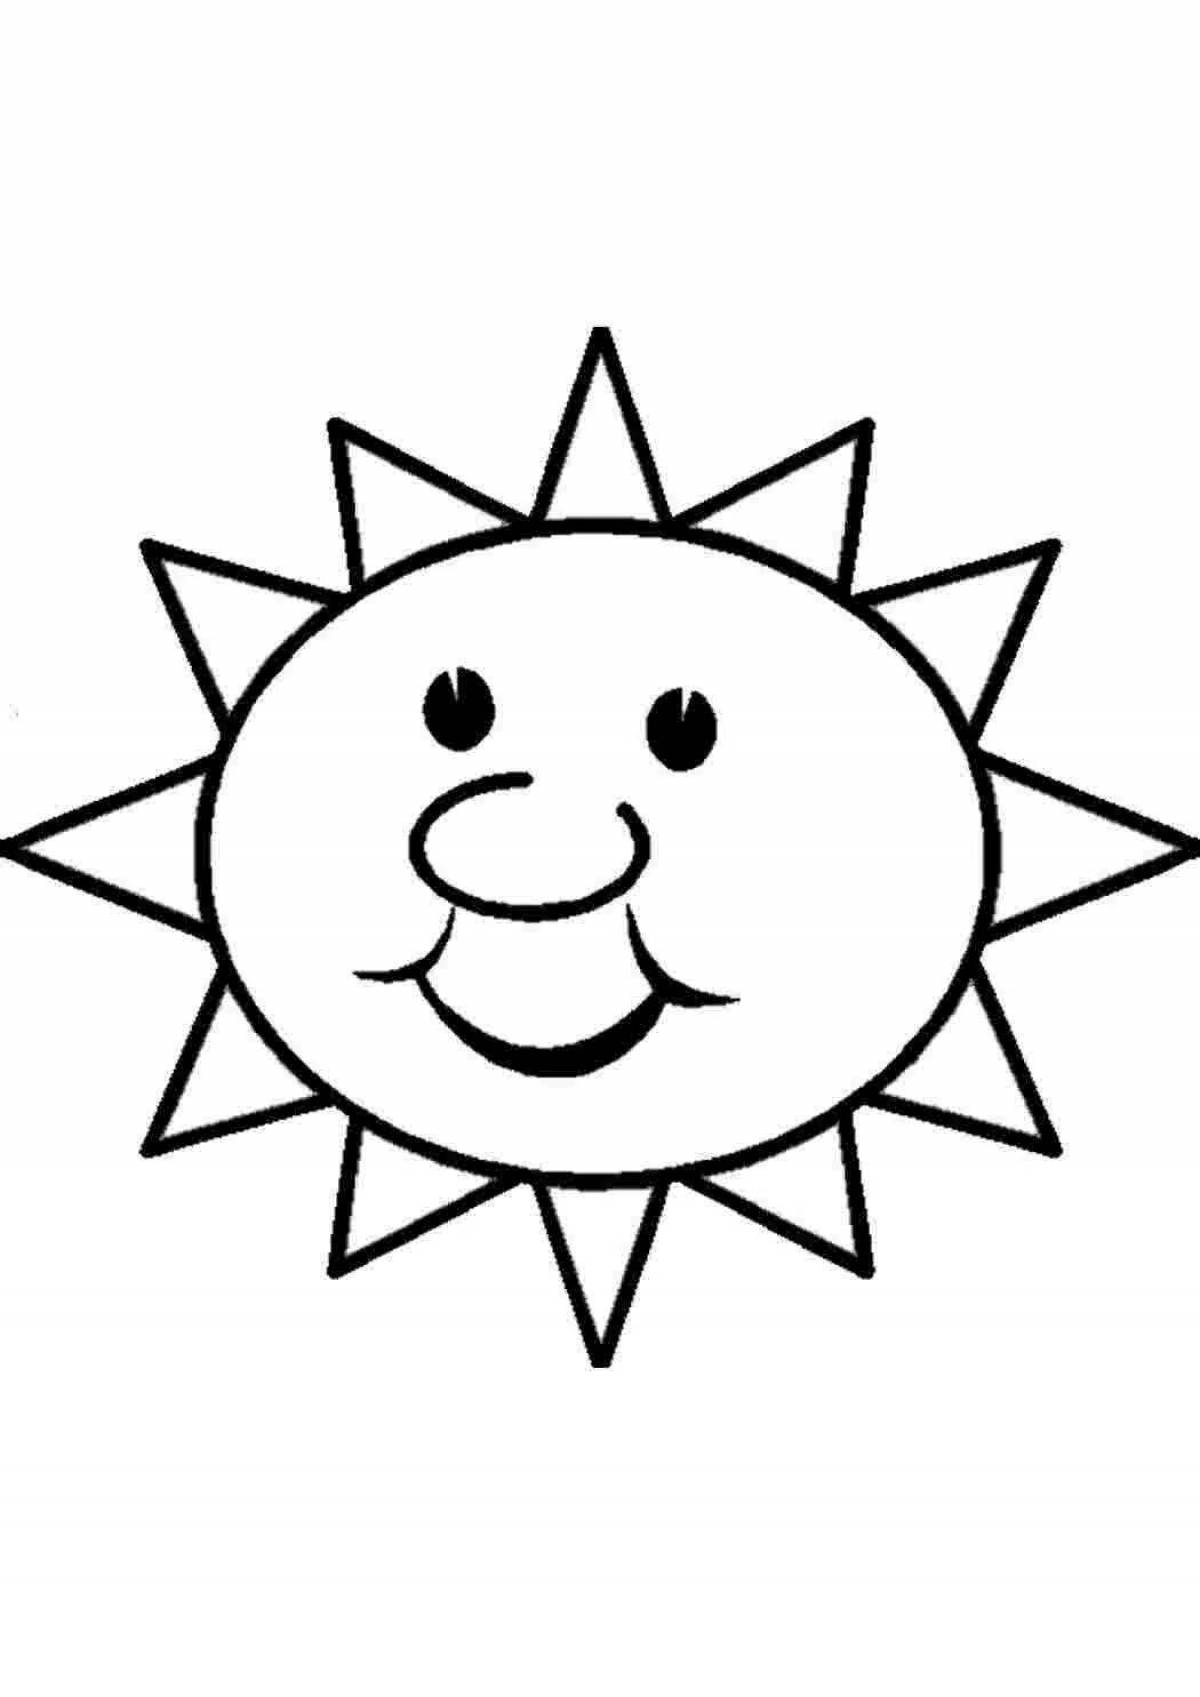 Красочная раскраска солнце для детей 3-4 лет